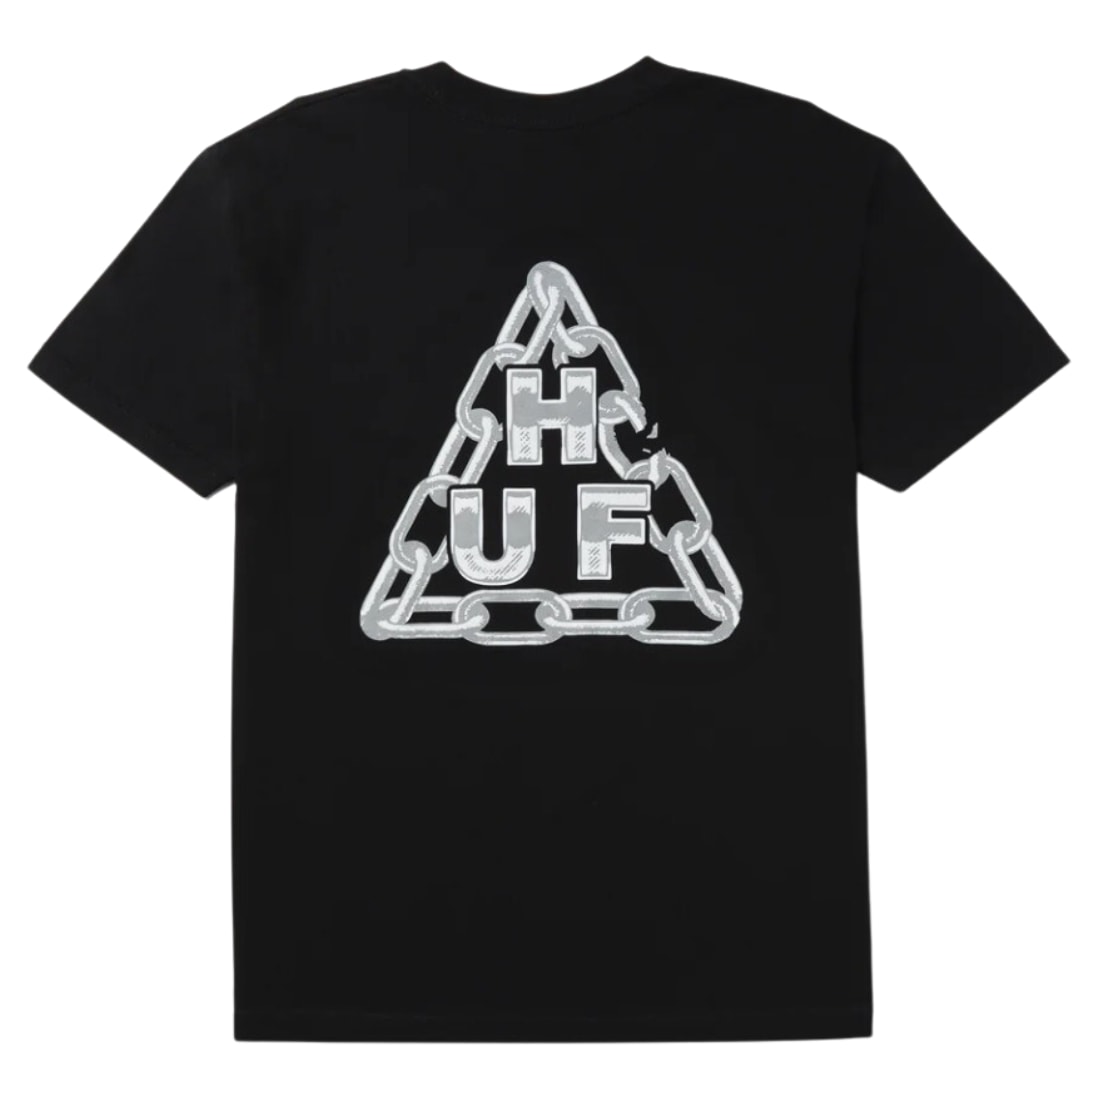 Huf Hard Links T-Shirt - Black - Mens Skate Brand T-Shirt by Huf